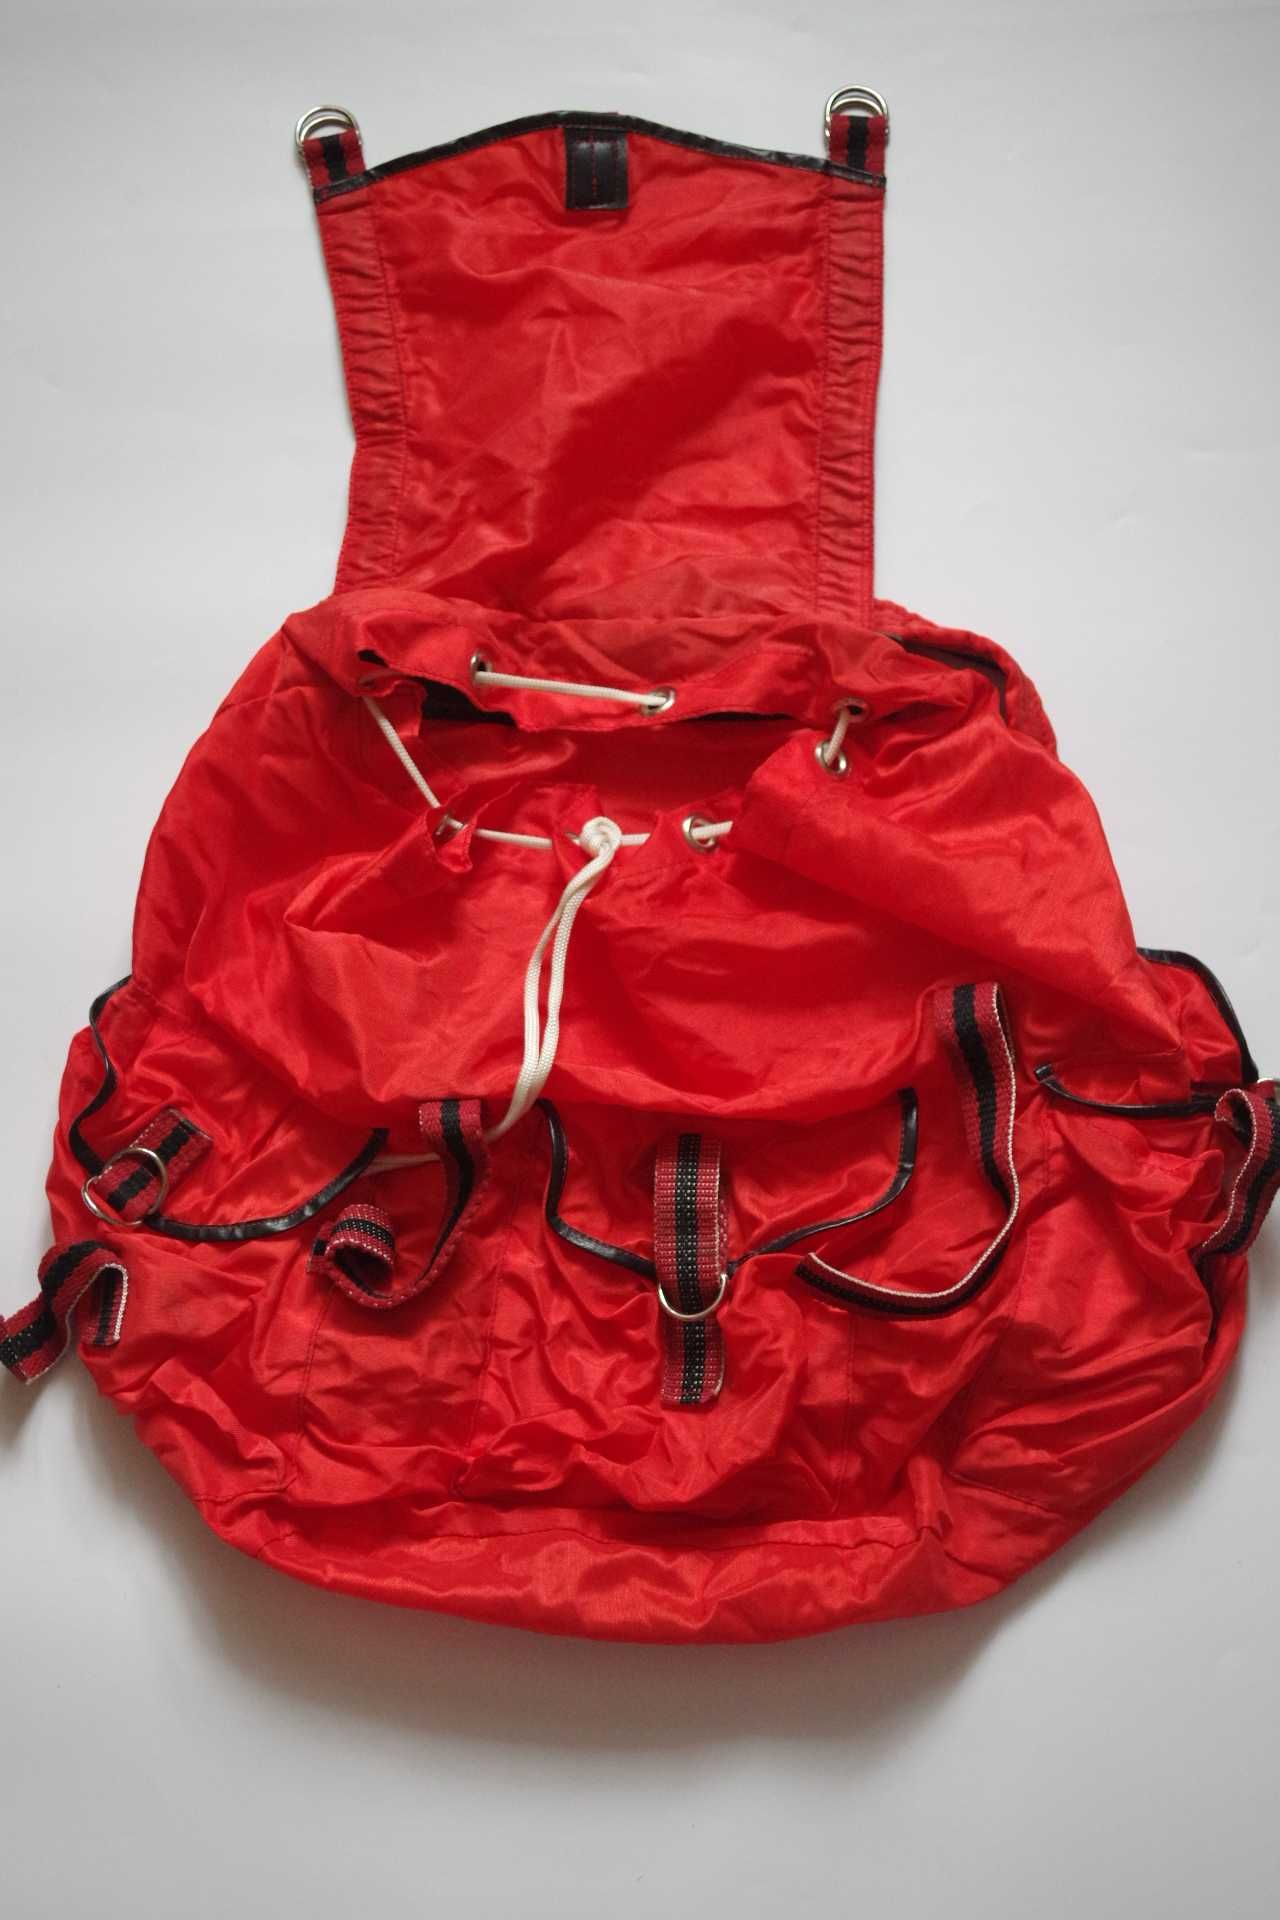 Plecak Made in USRR, Old School